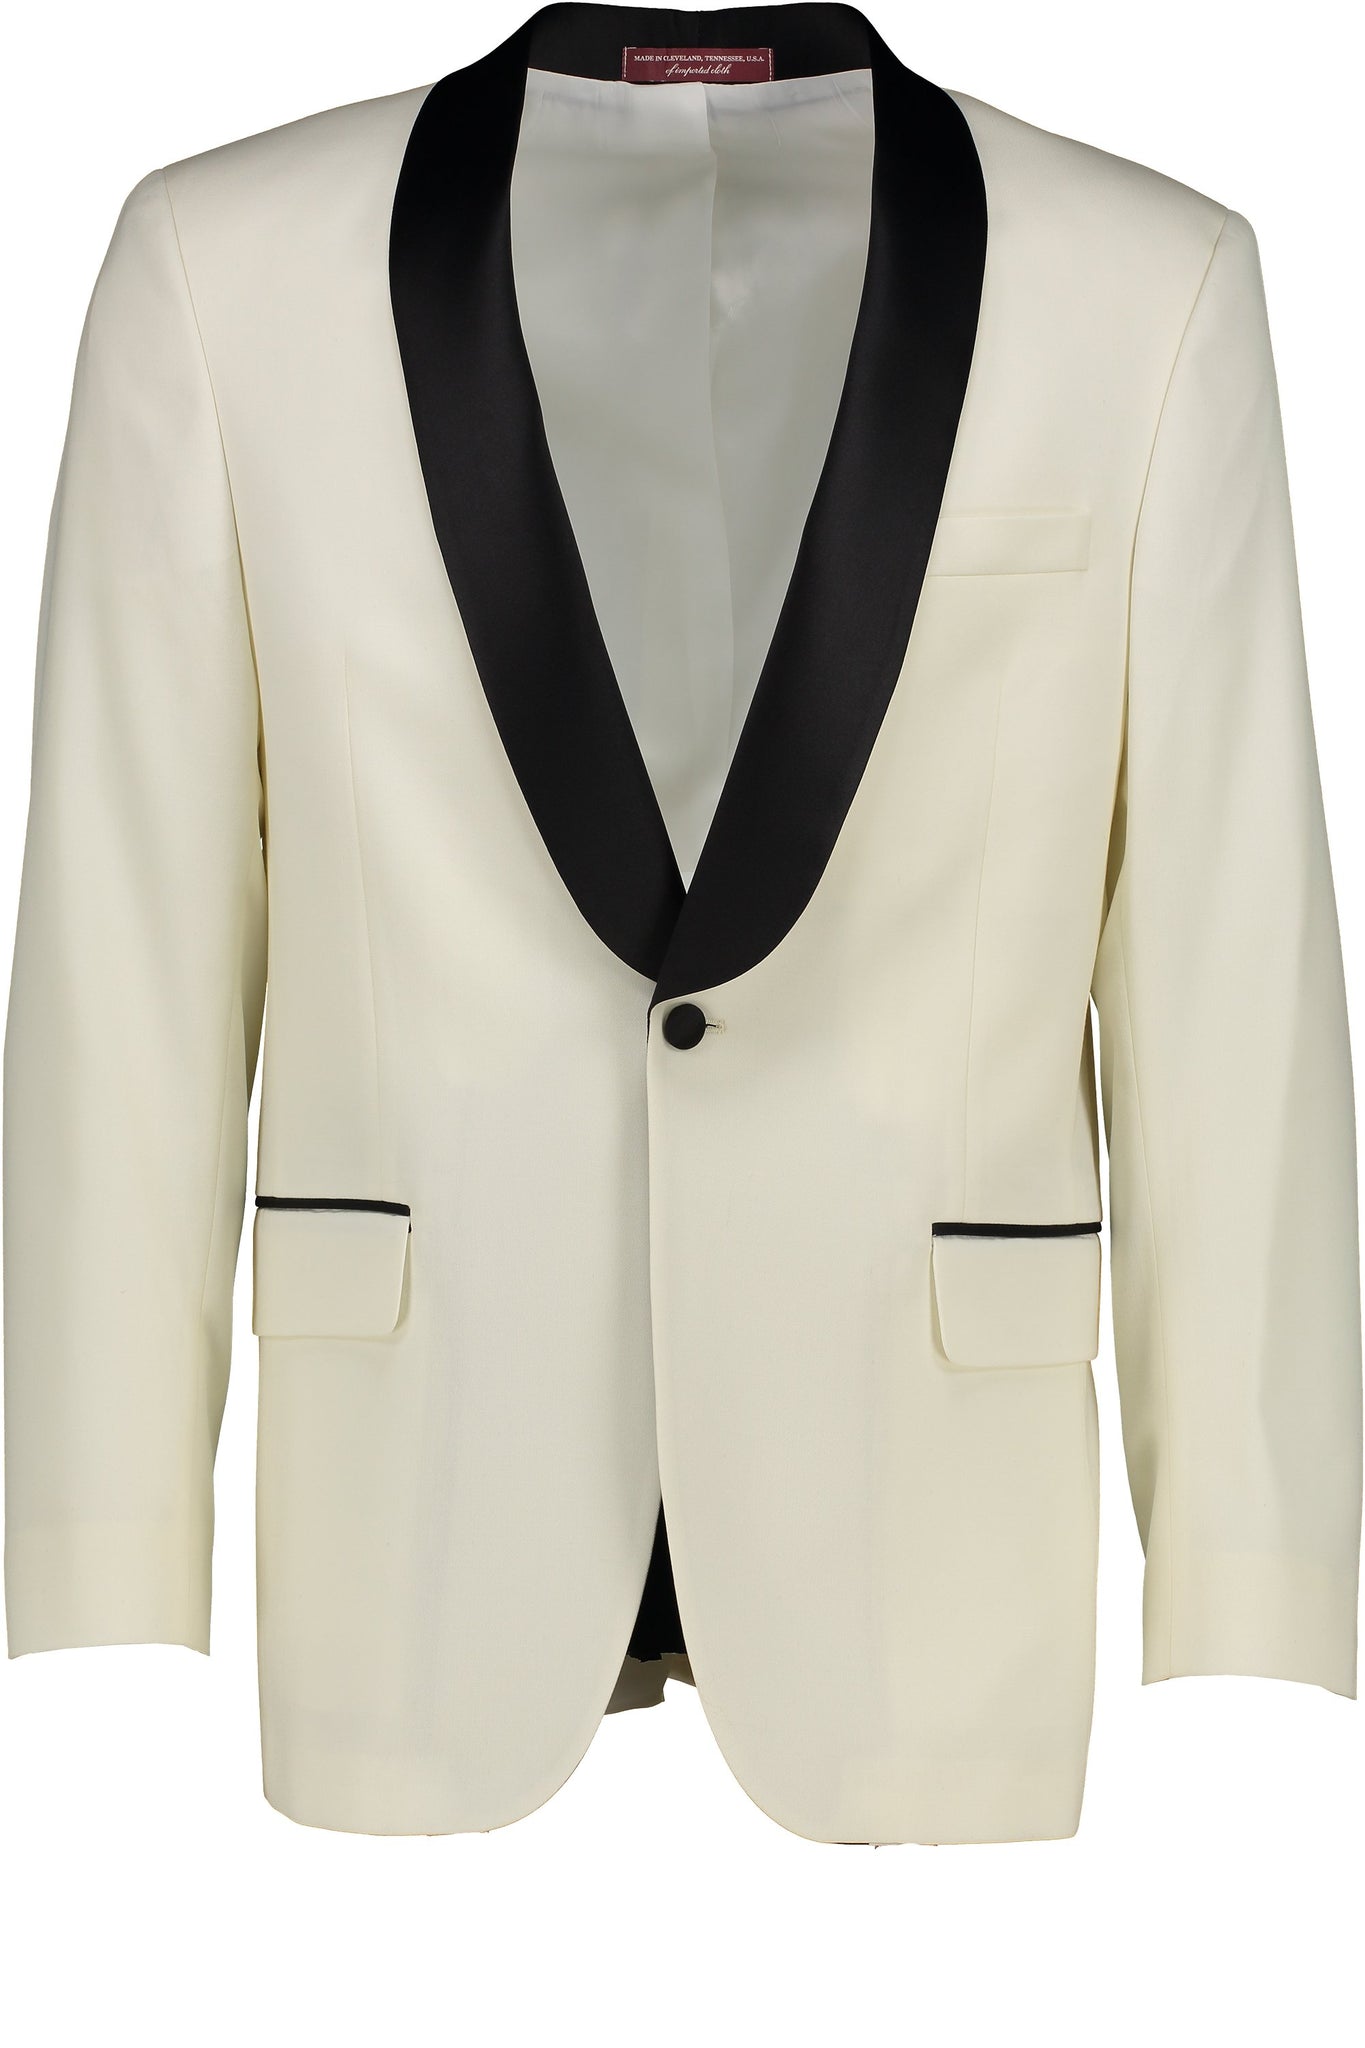 Classic Fit Ivory Wool Dinner Jacket with Black Satin Shawl Collar -  Hardwick.com